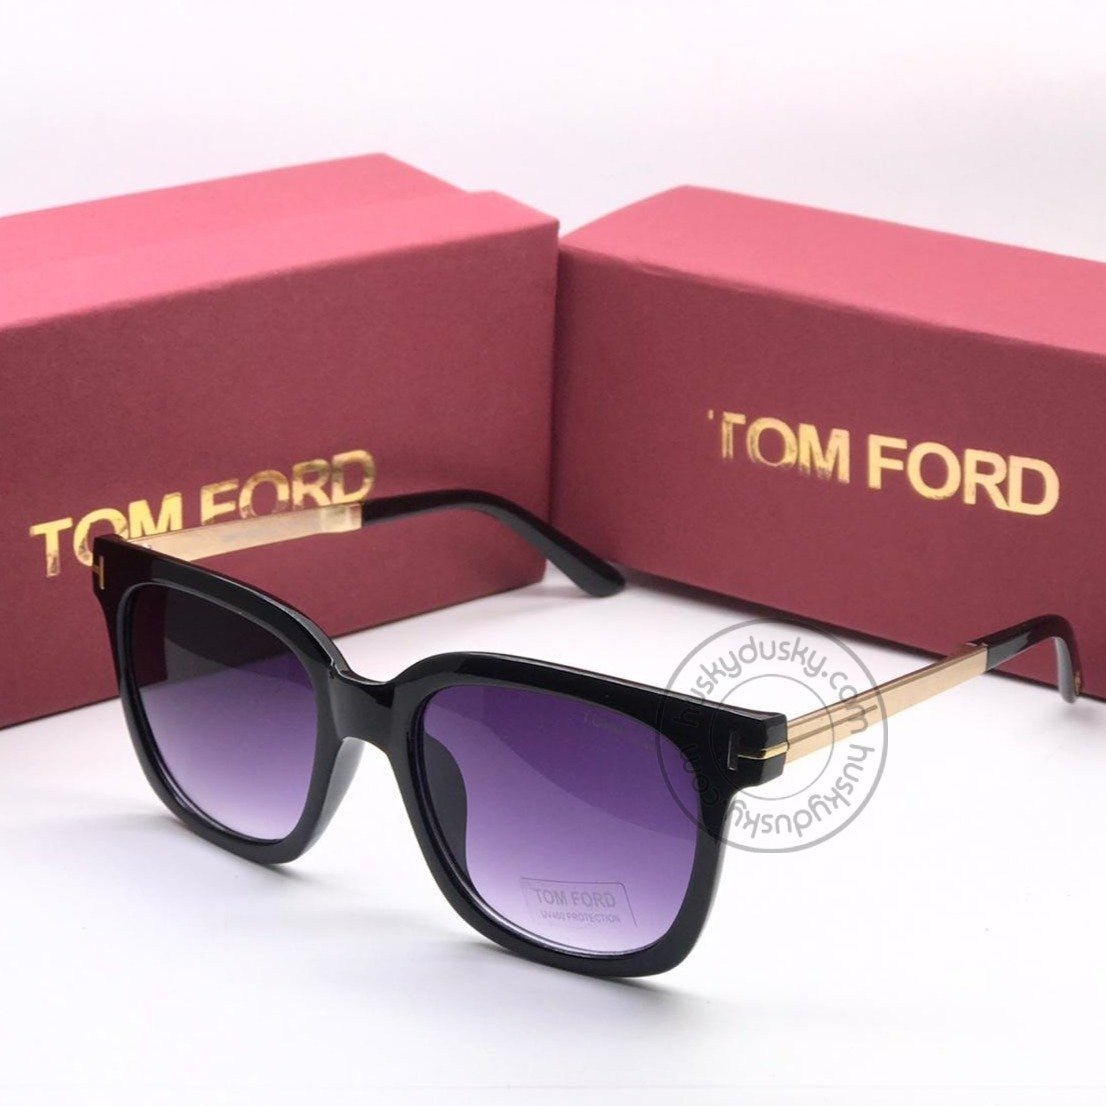 Tom Ford Latest Design Purple Color Glass Men's Women's For Man Woman or Girl TF-315 Black Frame Sunglass